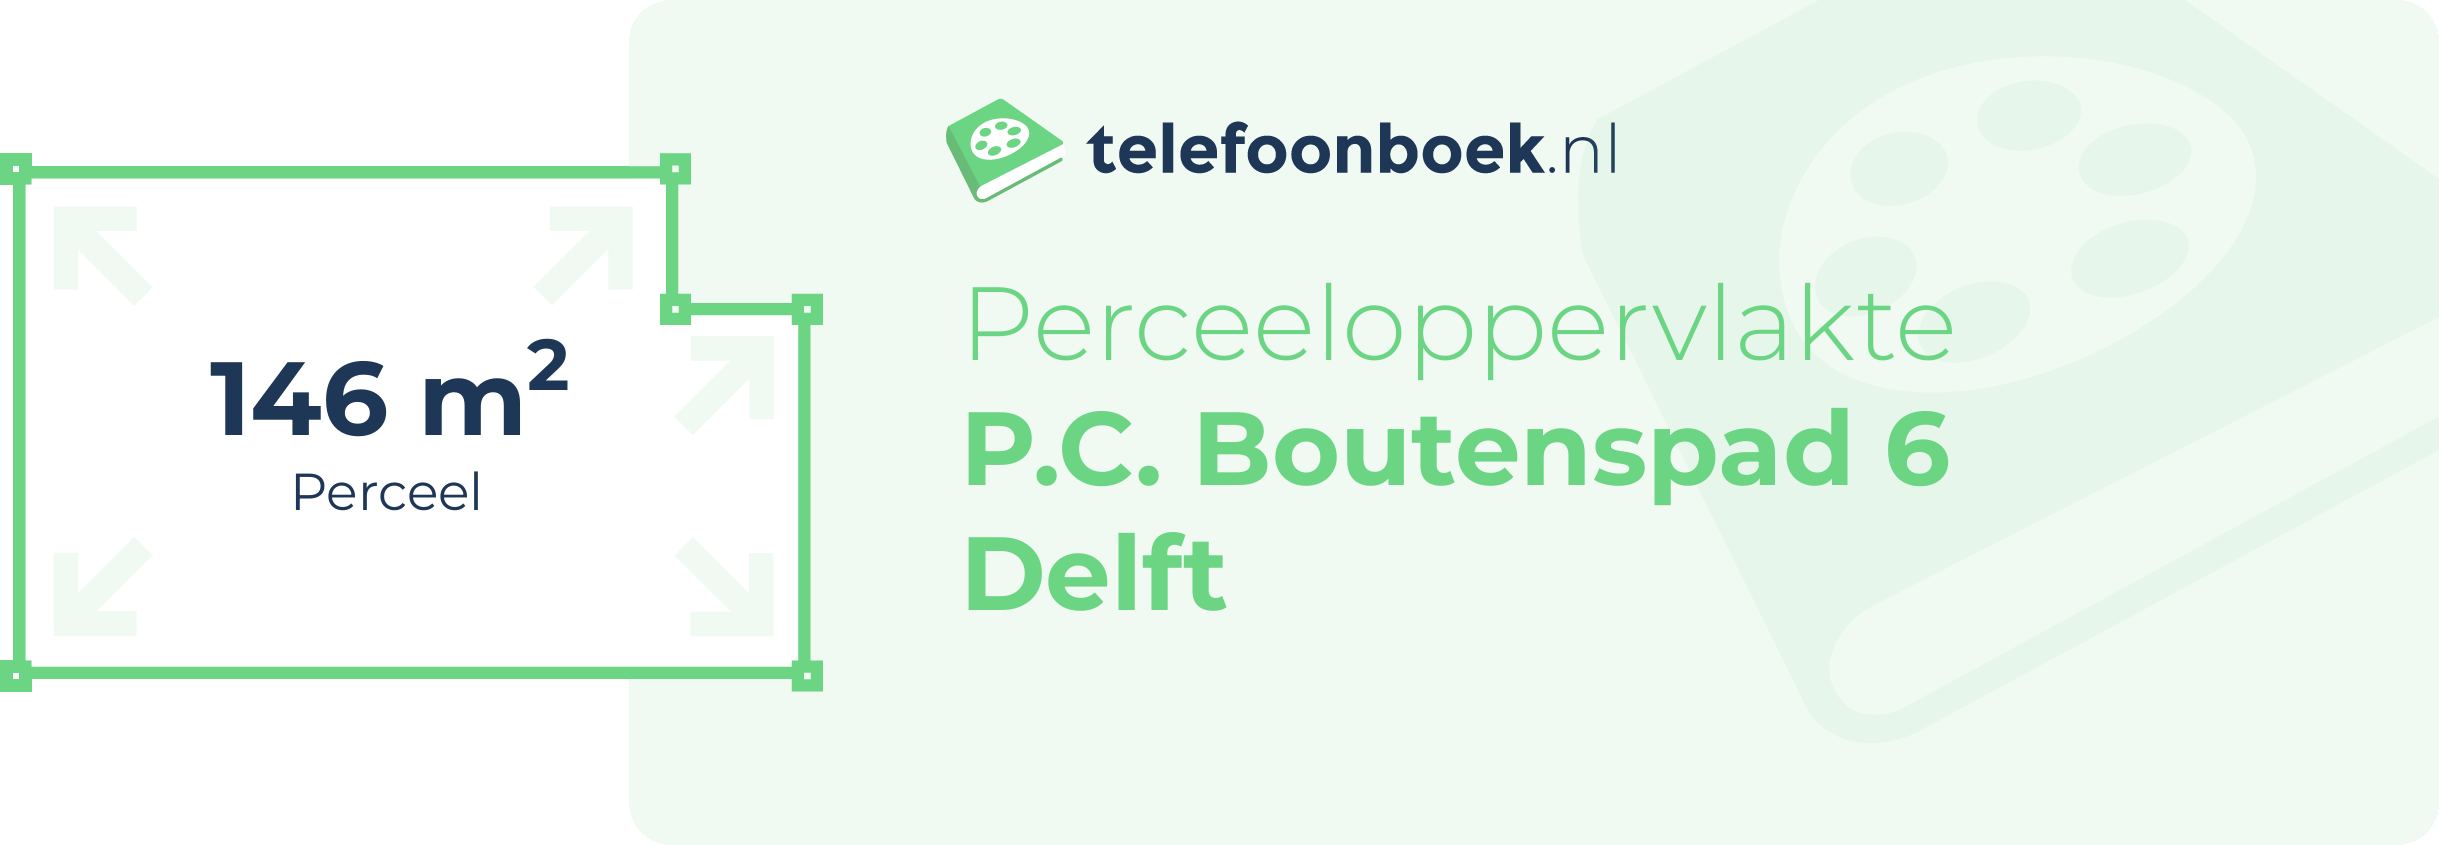 Perceeloppervlakte P.C. Boutenspad 6 Delft